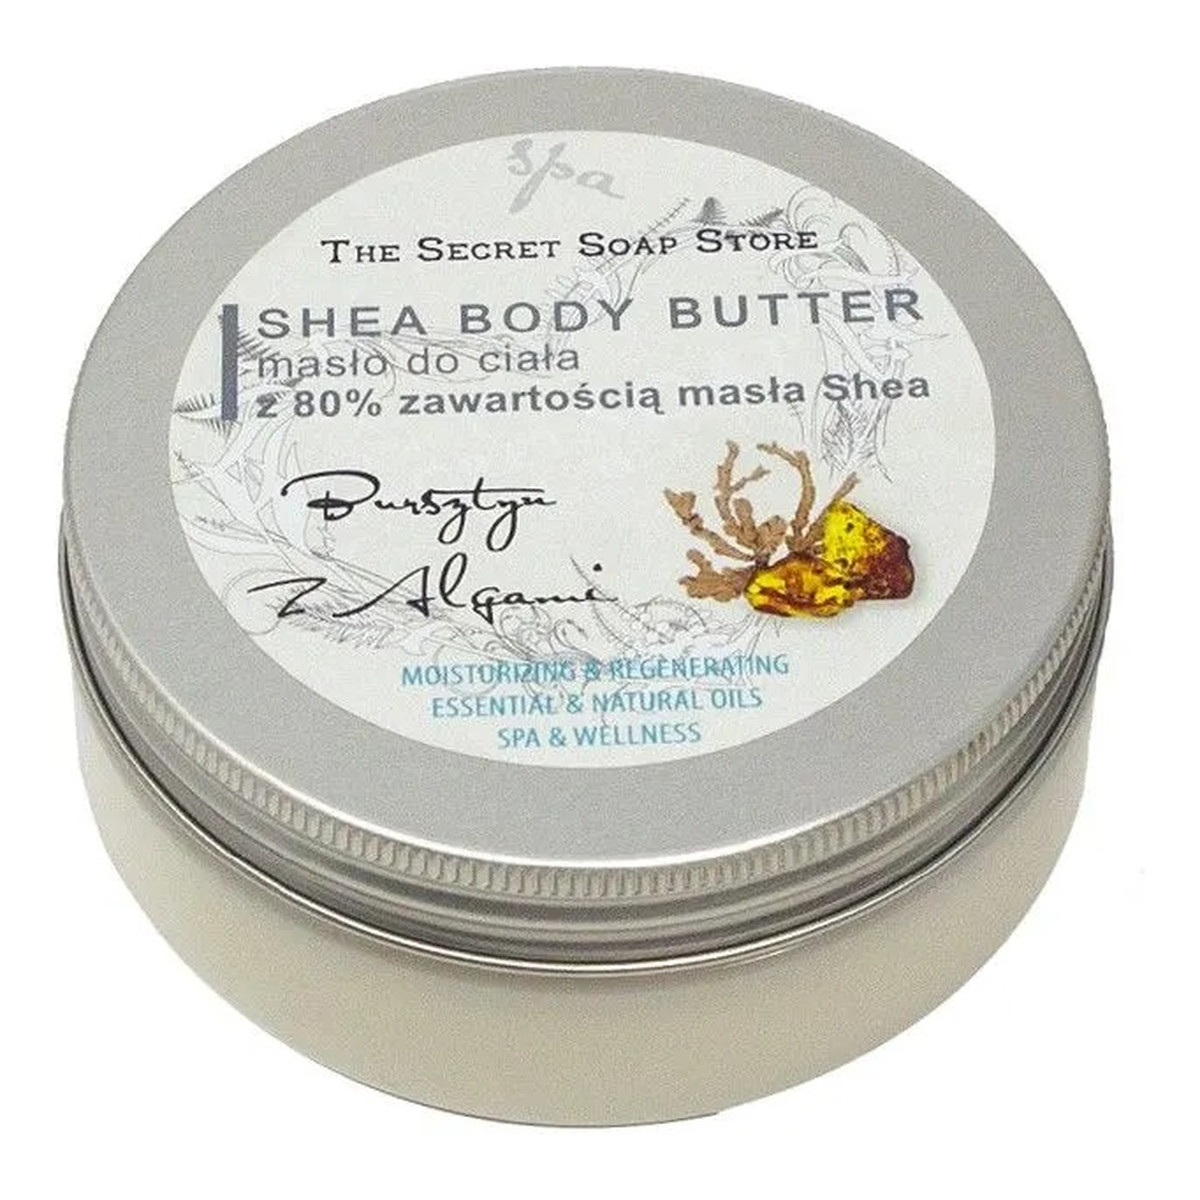 The Secret Soap Store Shea butter 80% masło do ciała bursztyn z algami 200ml